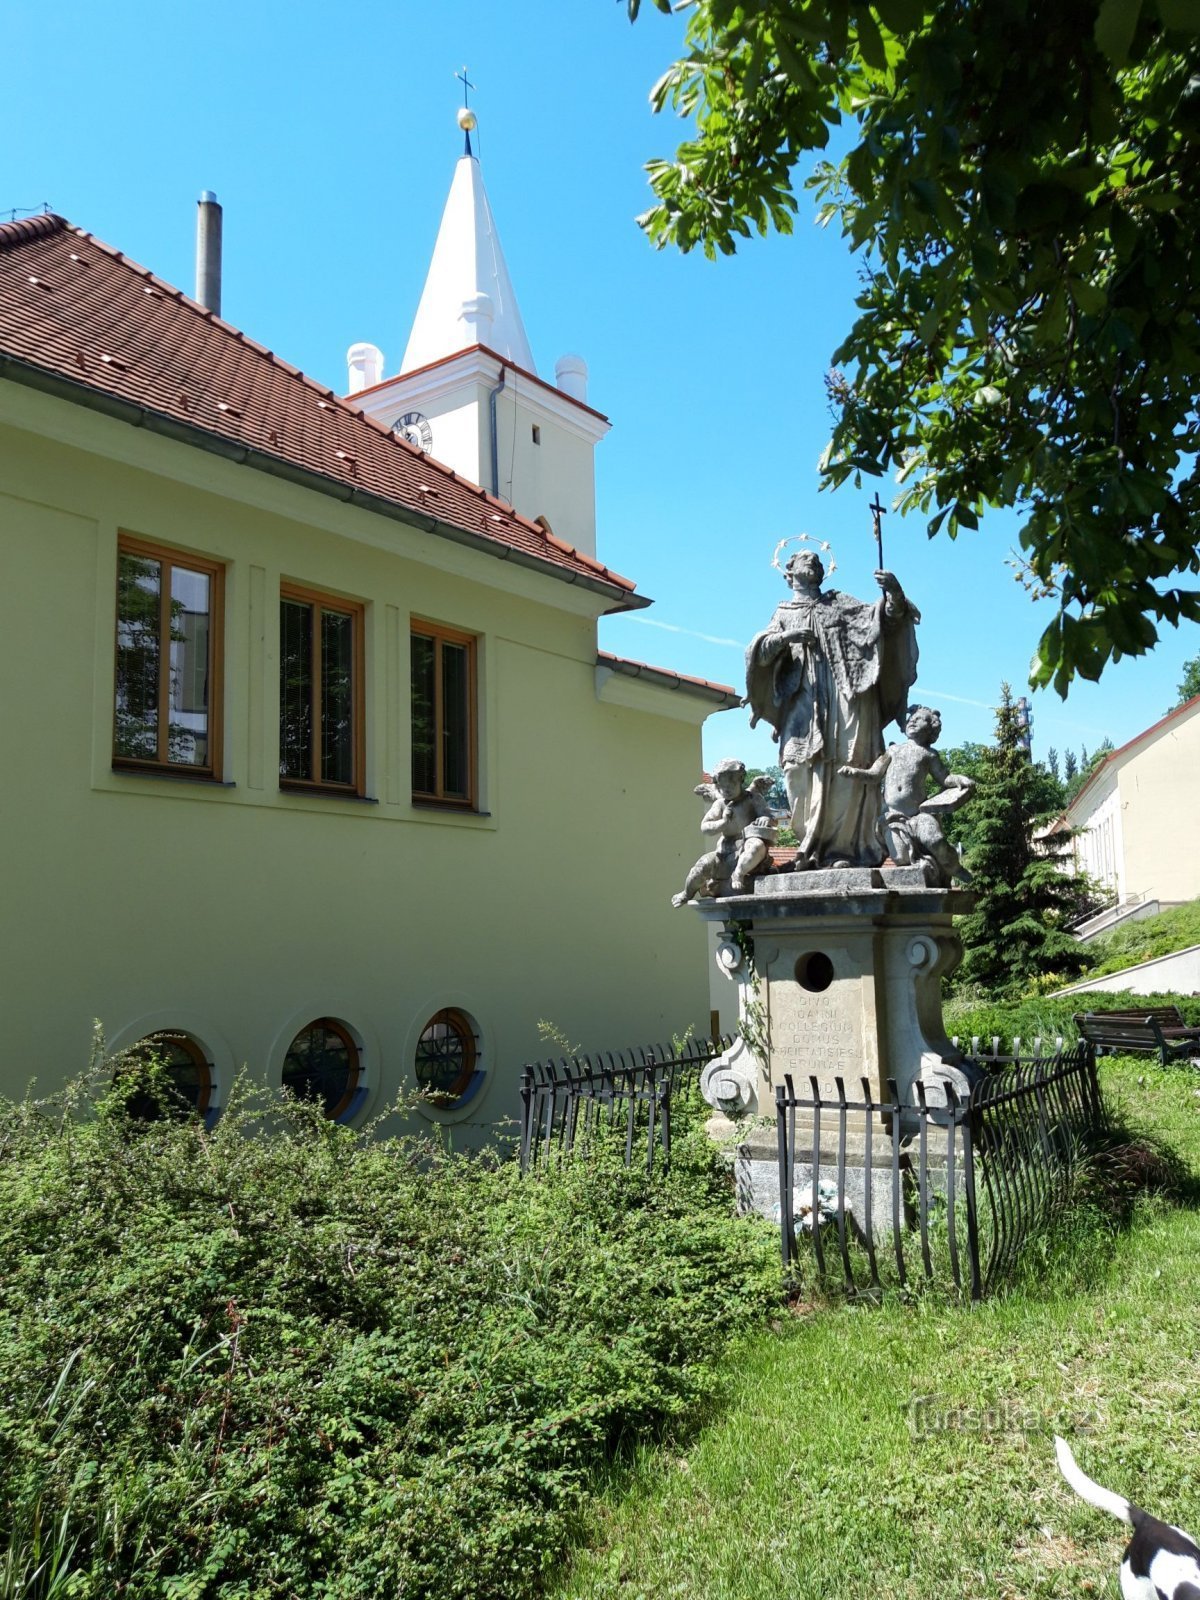 St. Lawrence Church in Brno